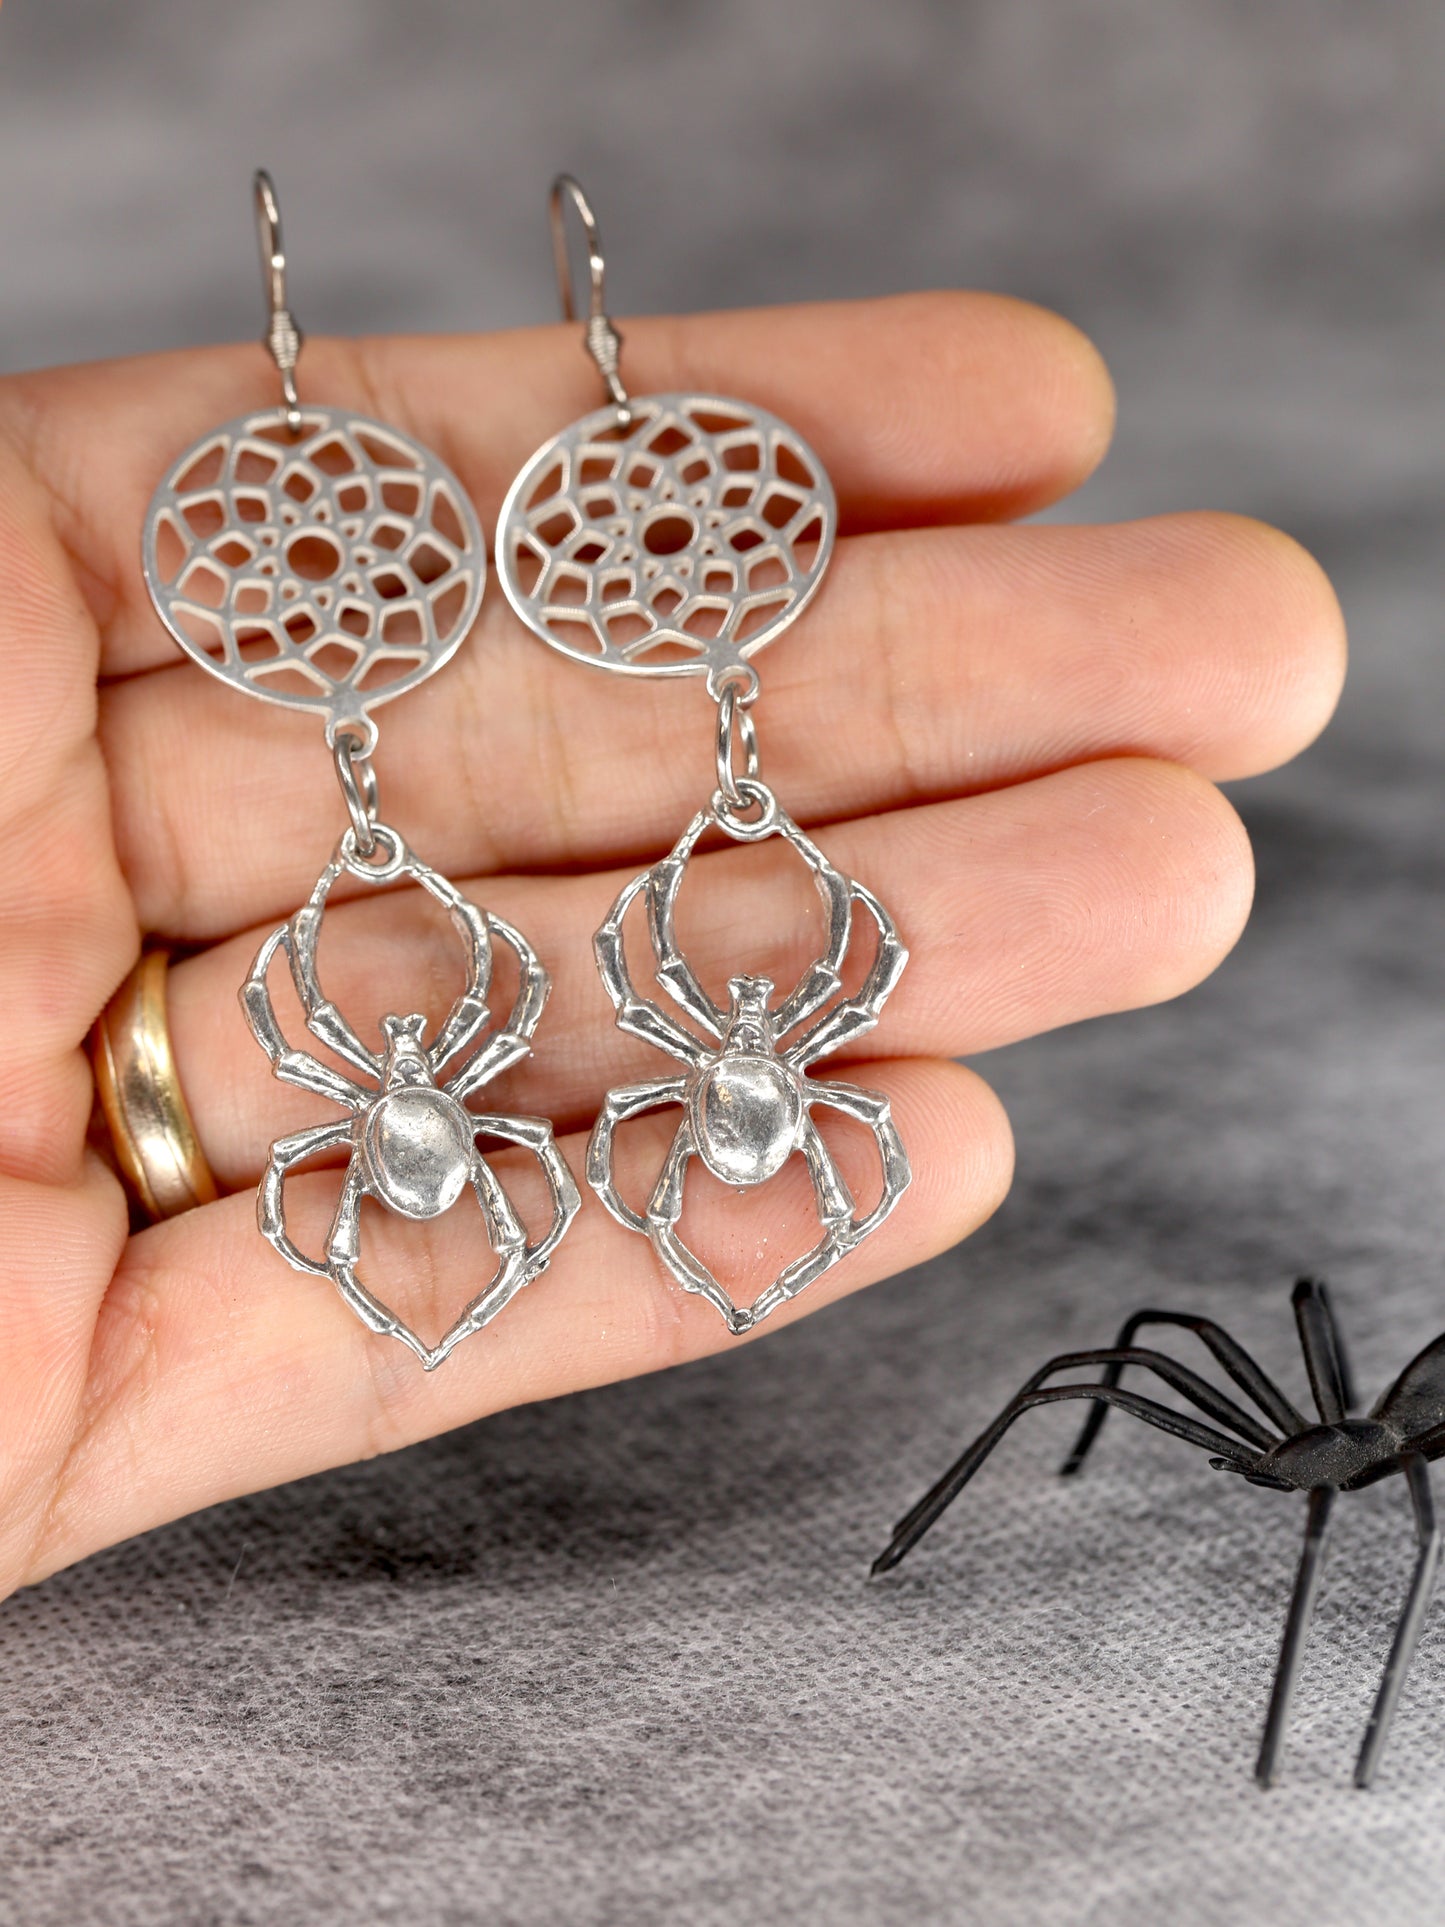 Crab spider & dreamcatcher earrings